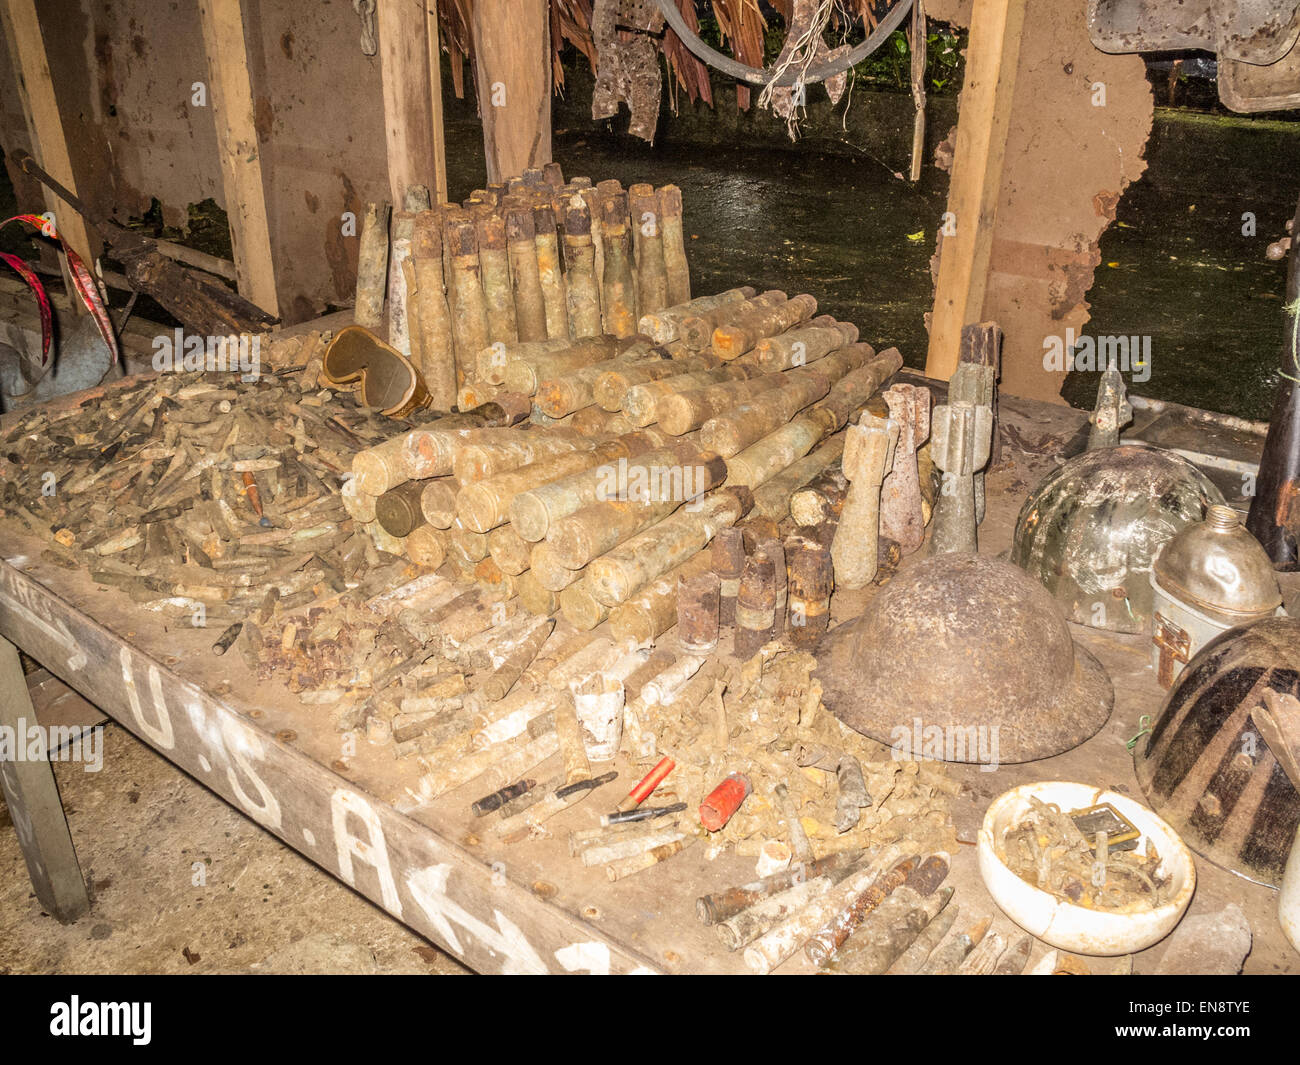 Old rusted WWII ammunition and weapons at Espiritu Santo, Vanuatu. Stock Photo